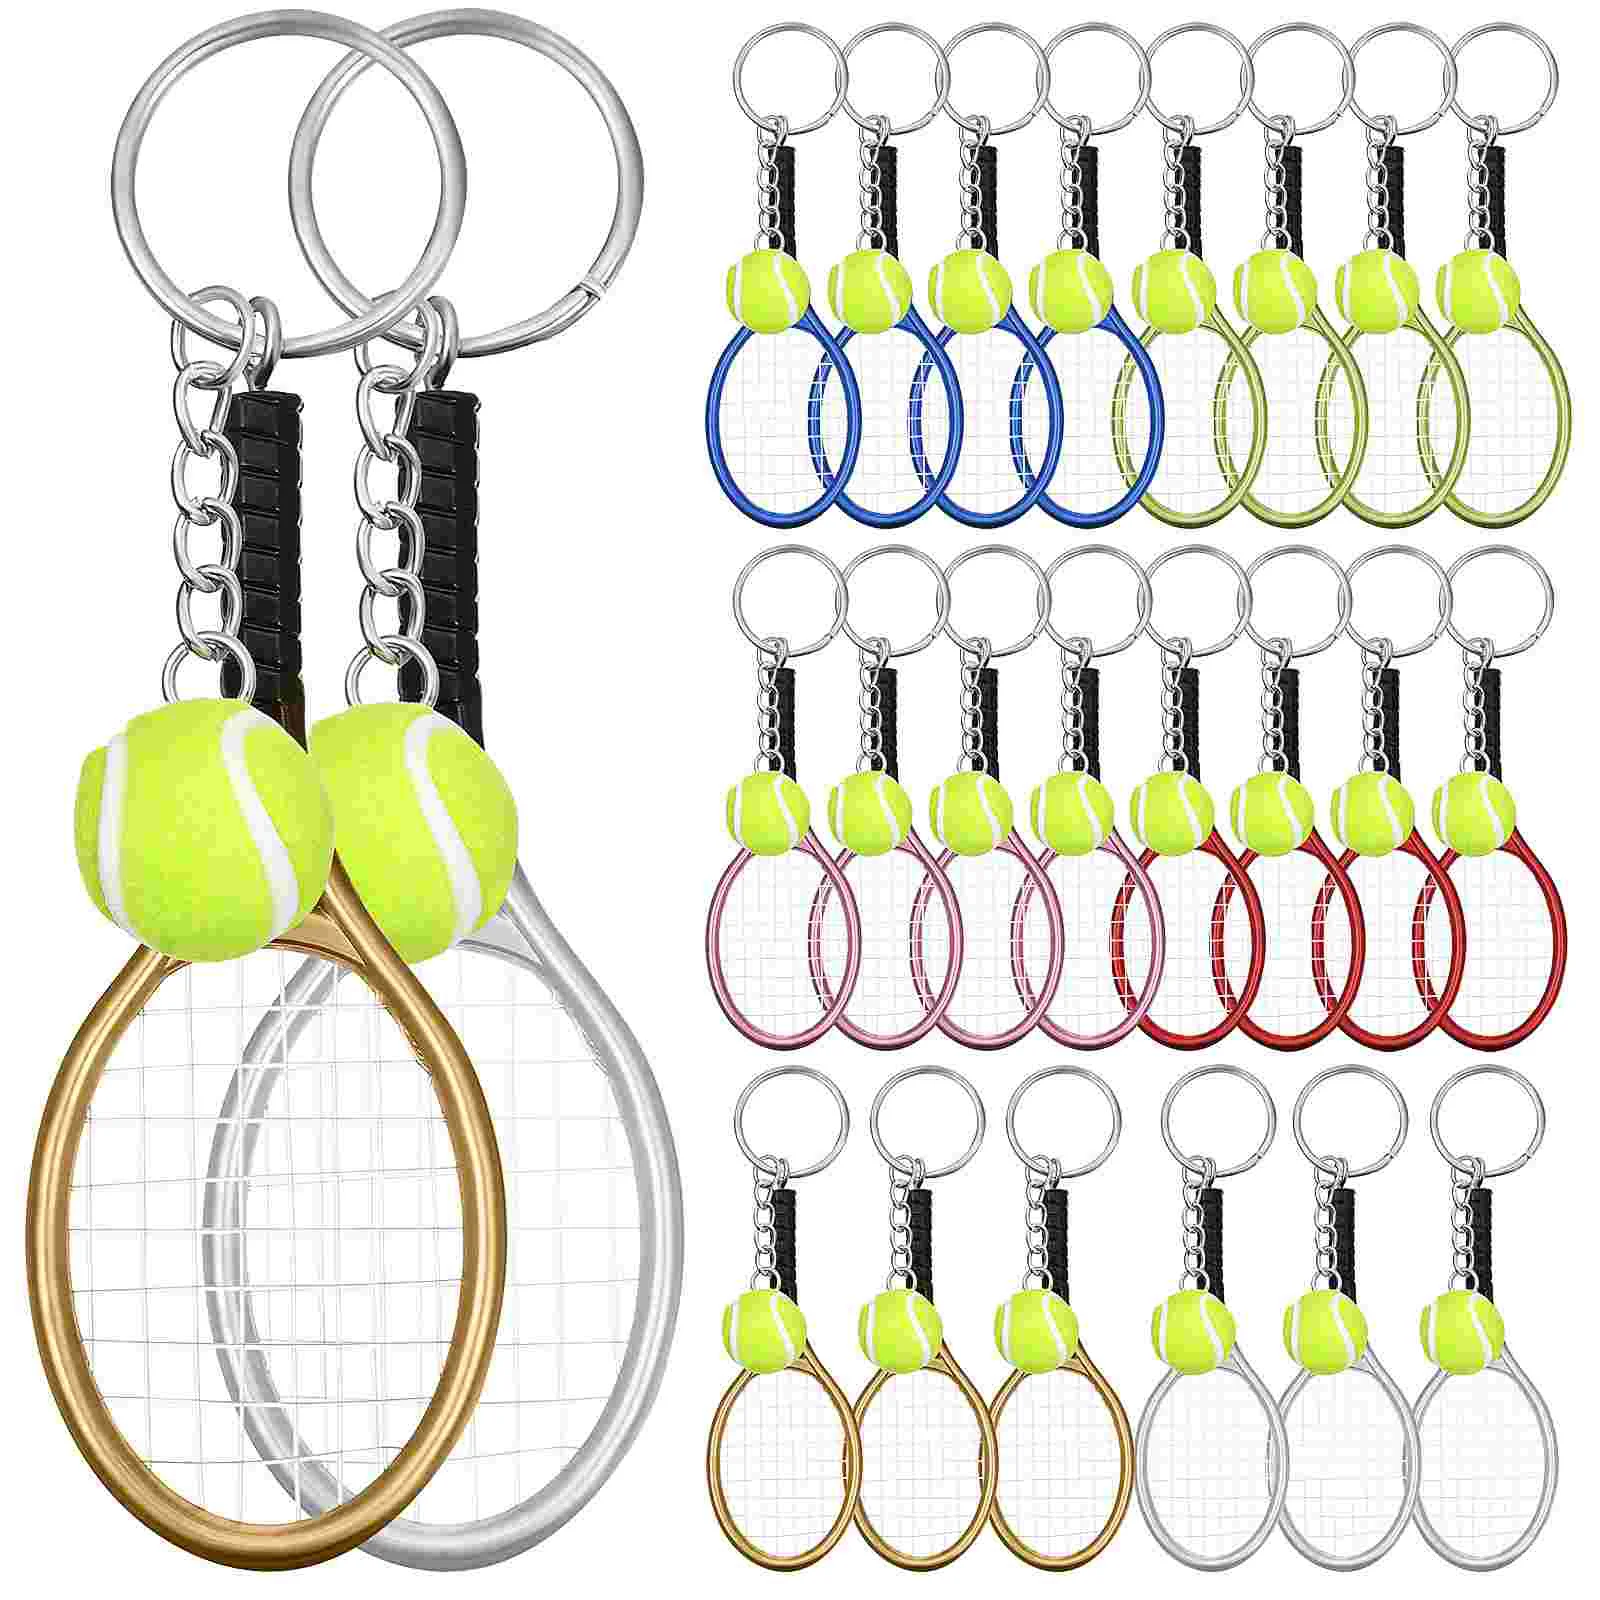 

24 Pcs Key Chain Tennis Ball Ring Mens Gifts Racket Mini Keychain Pendant Flocking Miss Fob